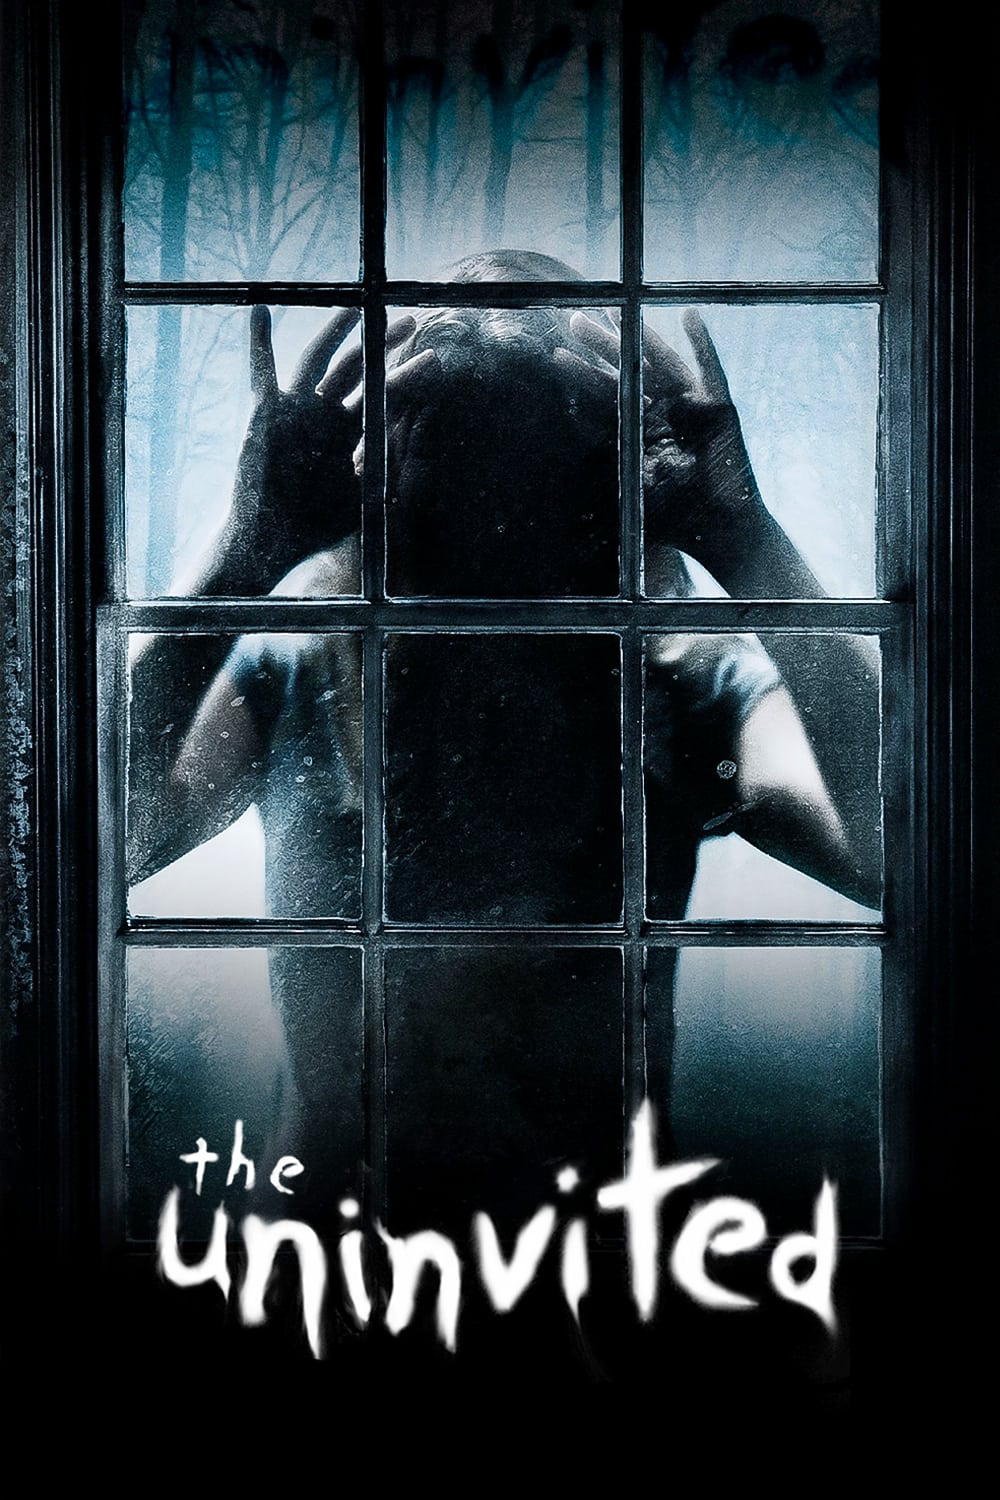 The Uninvited (The Uninvited) [2009]